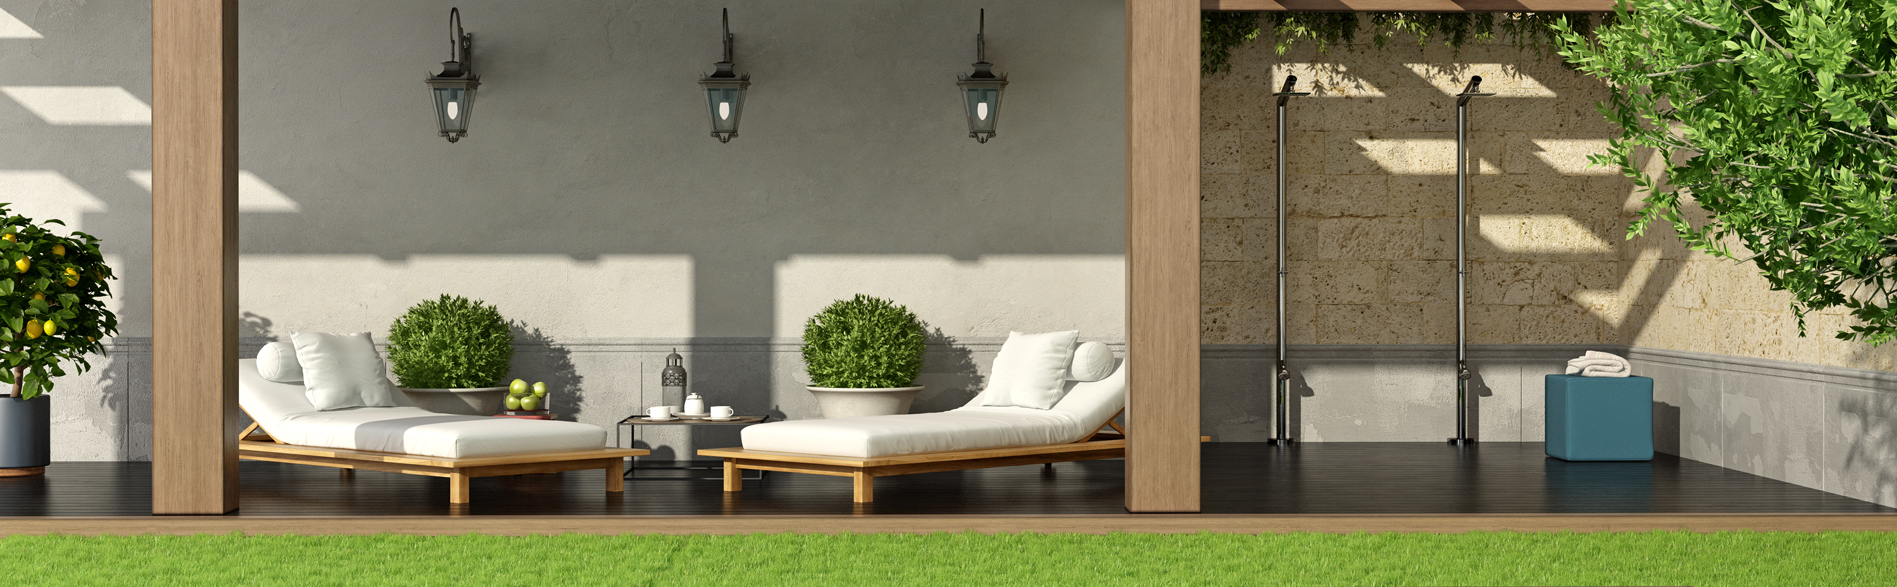 artificial turf for decks, patios